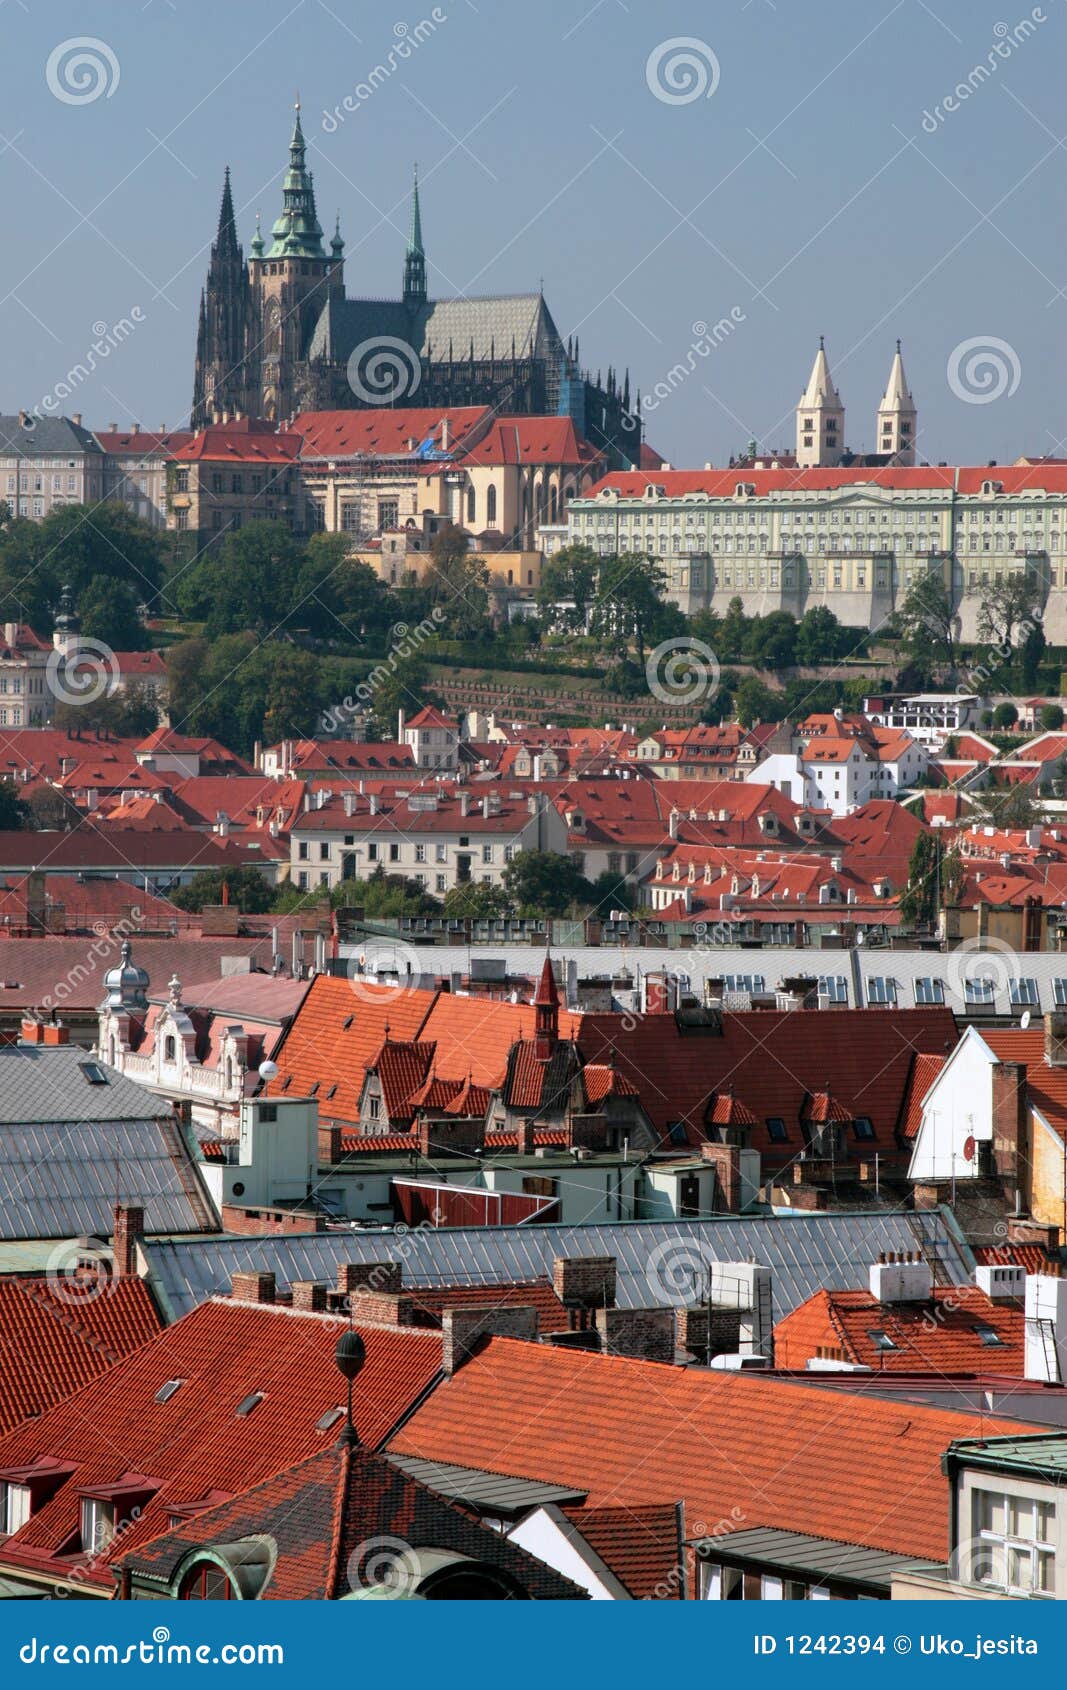 praha - prague, castle in the capital city of the czech republic